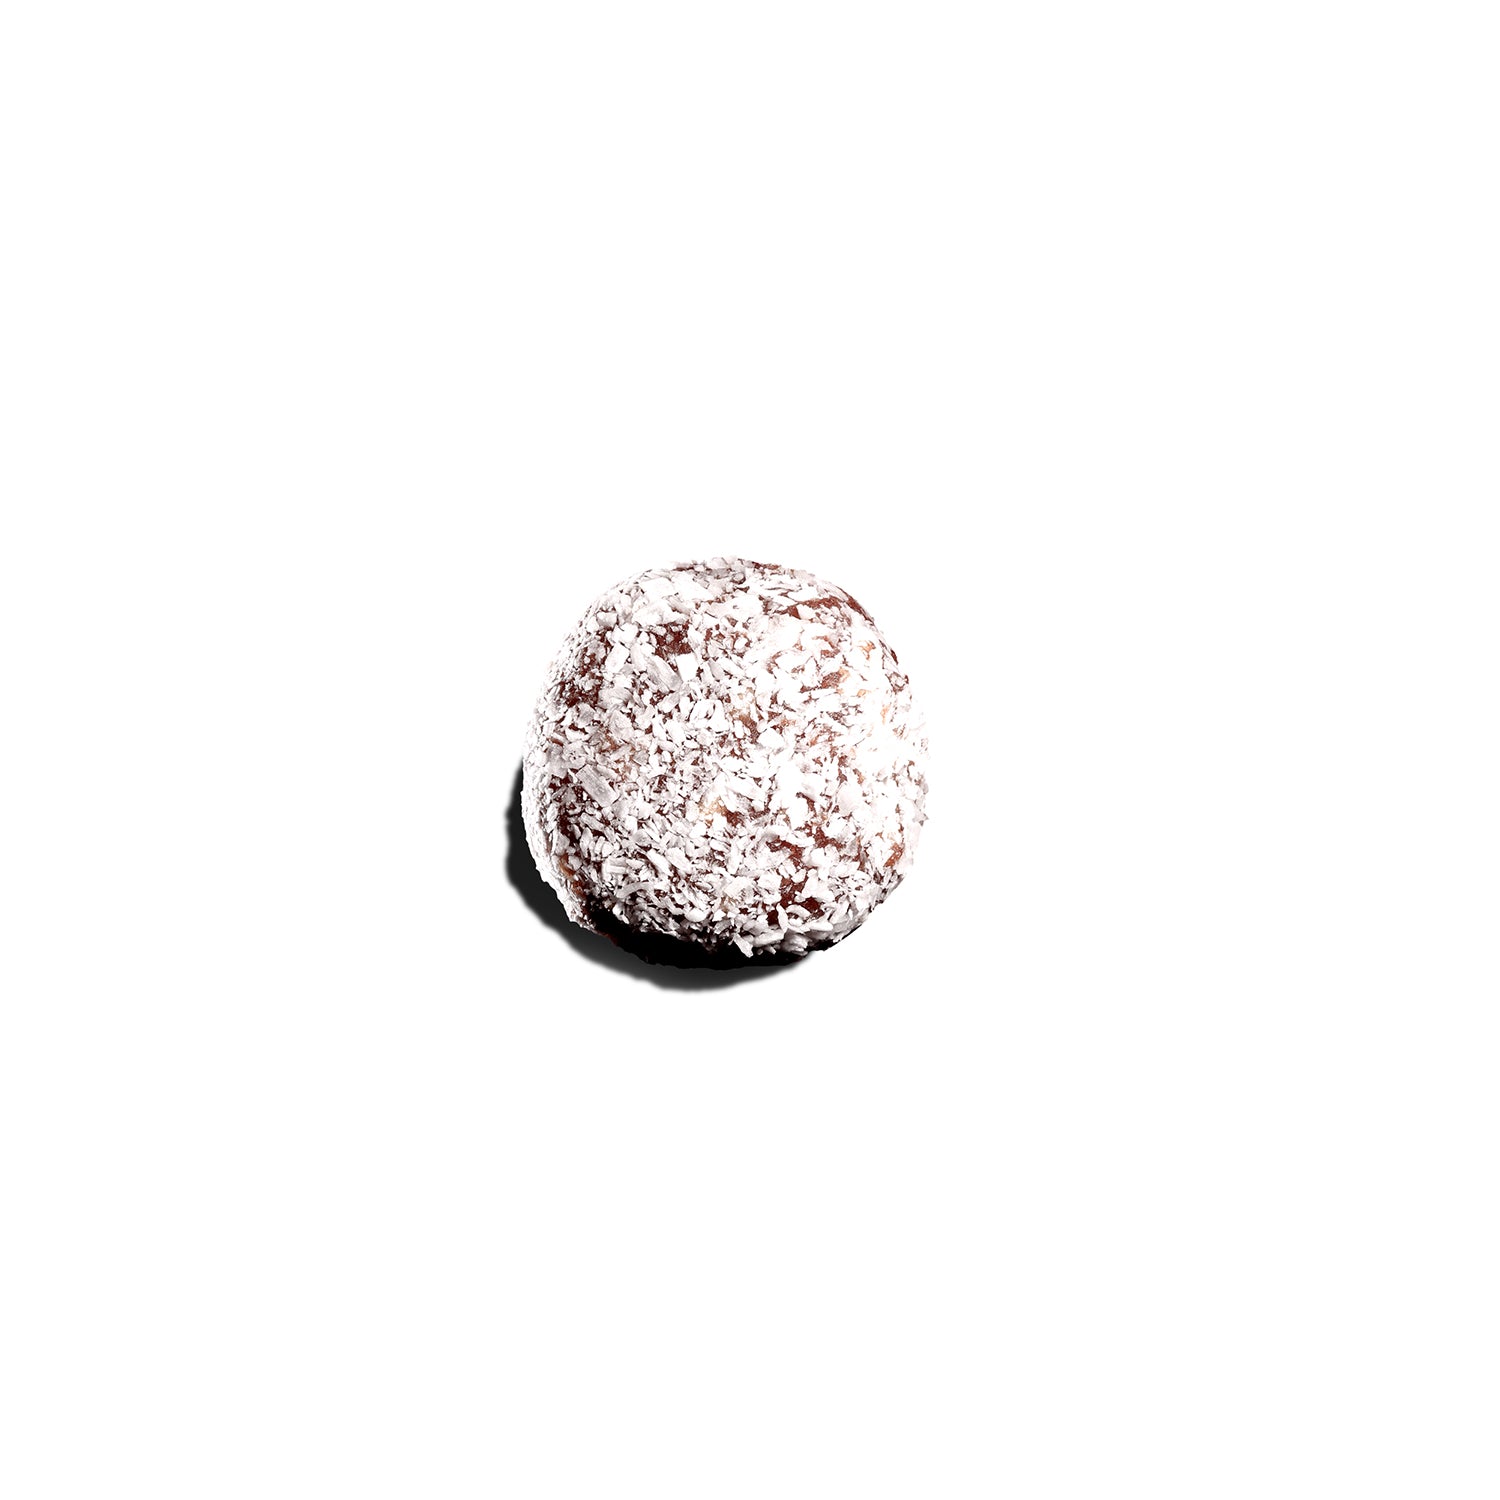 cravers coconut hazelnut balls product